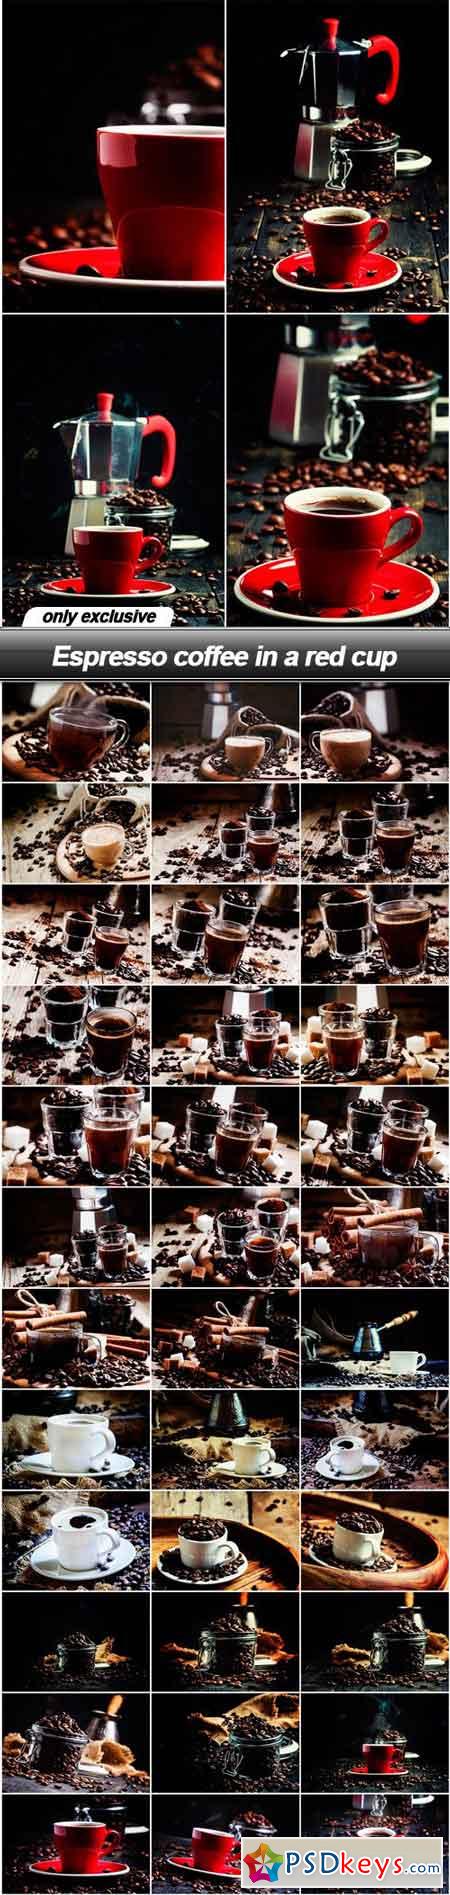 Espresso coffee in a red cup - 40 UHQ JPEG